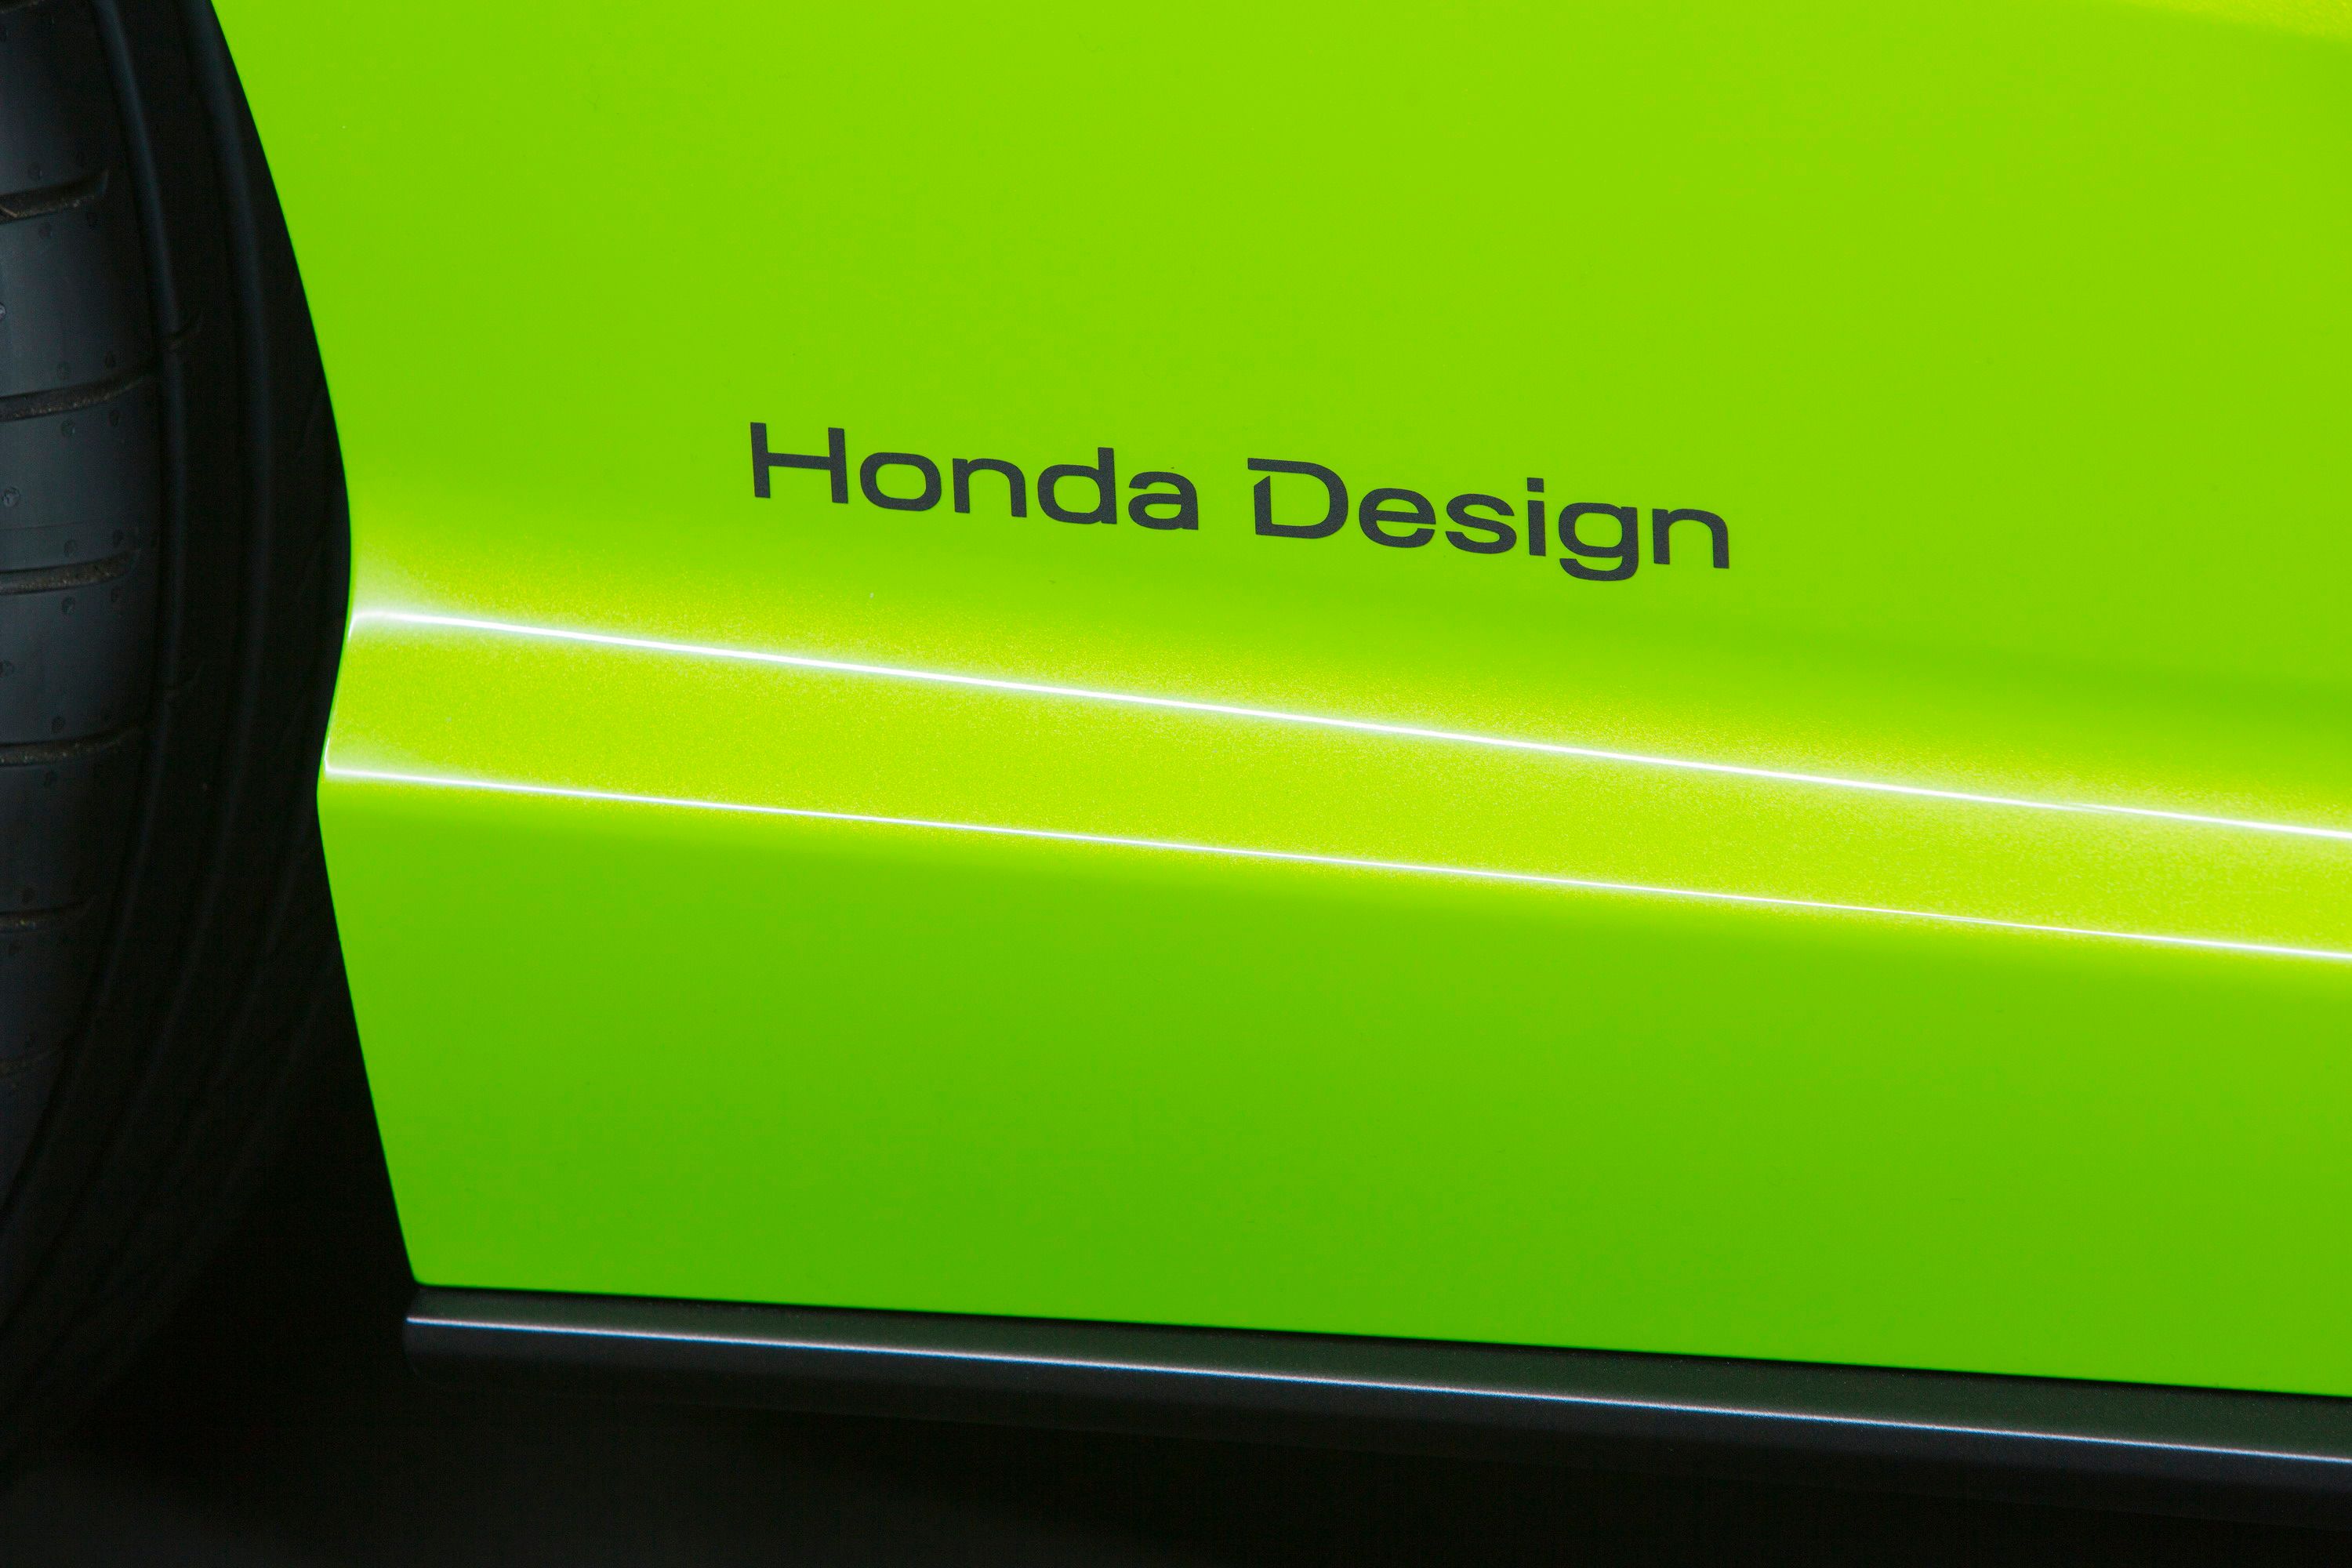 2015 Honda Civic Concept